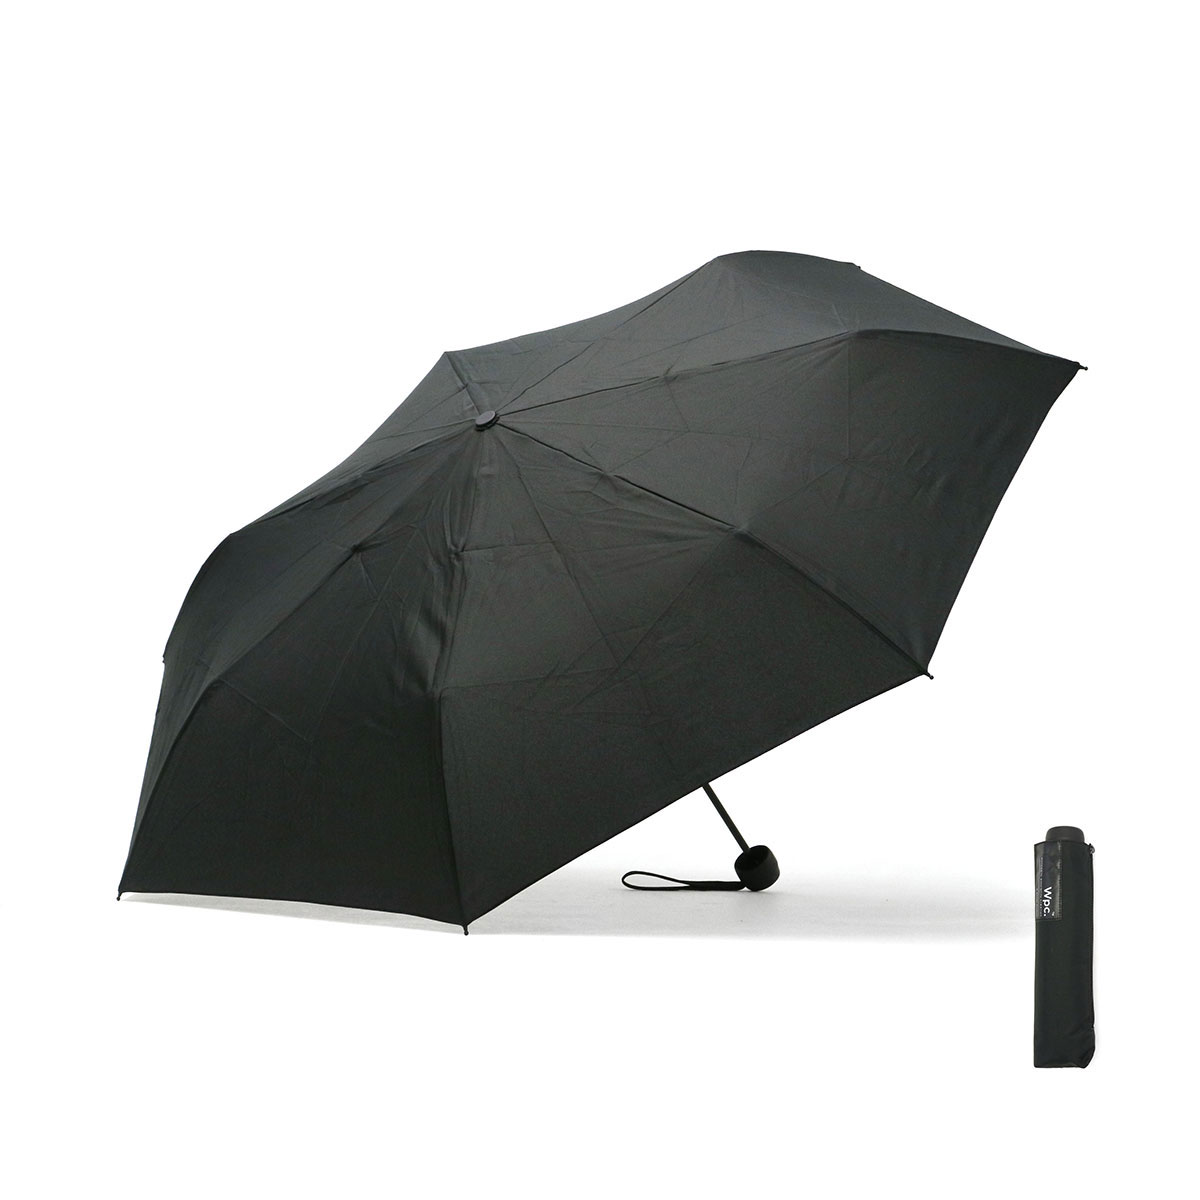 Wpc. 傘 メンズ レディース ダブリュピーシー 折りたたみ傘 雨傘 傘 軽量 手動開閉 晴雨兼用...